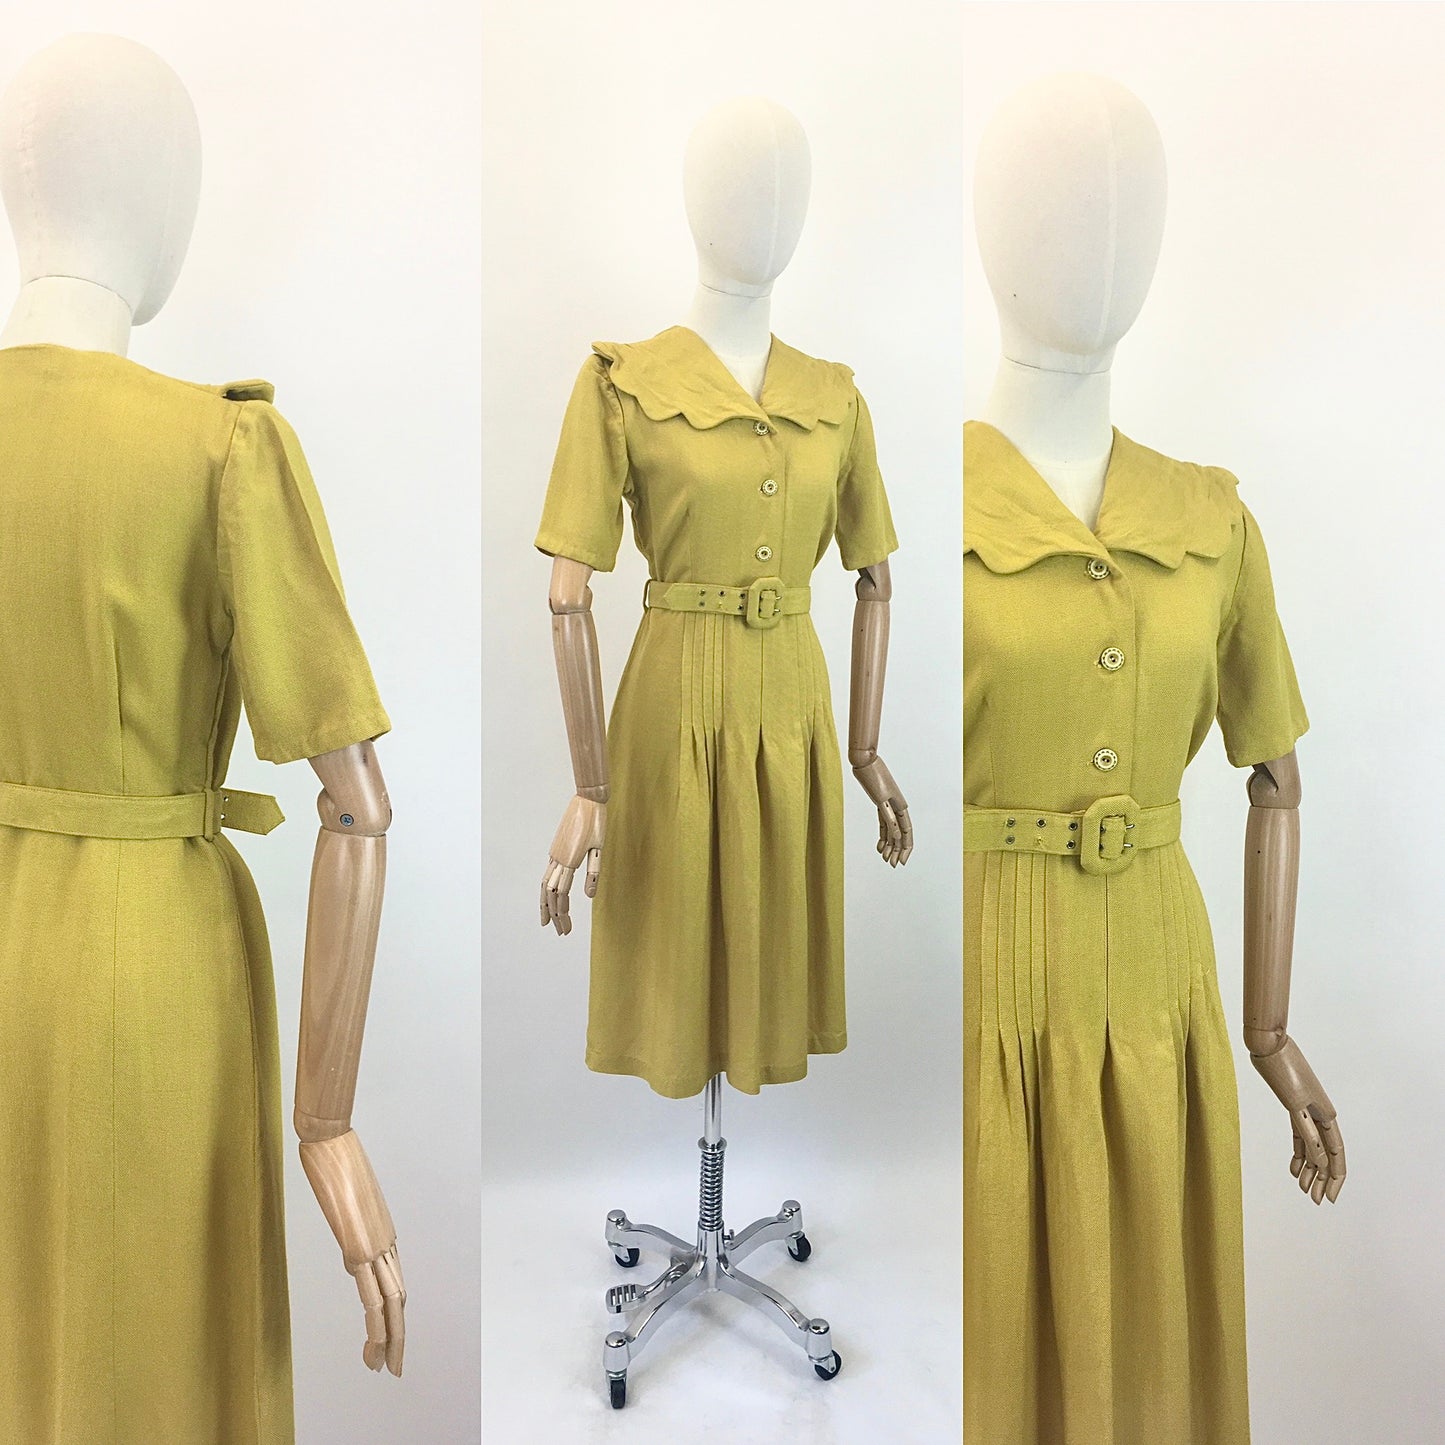 Original 1940's Stunning CC41 Moygashal Linen Dress - In A Bright Golden Yellow